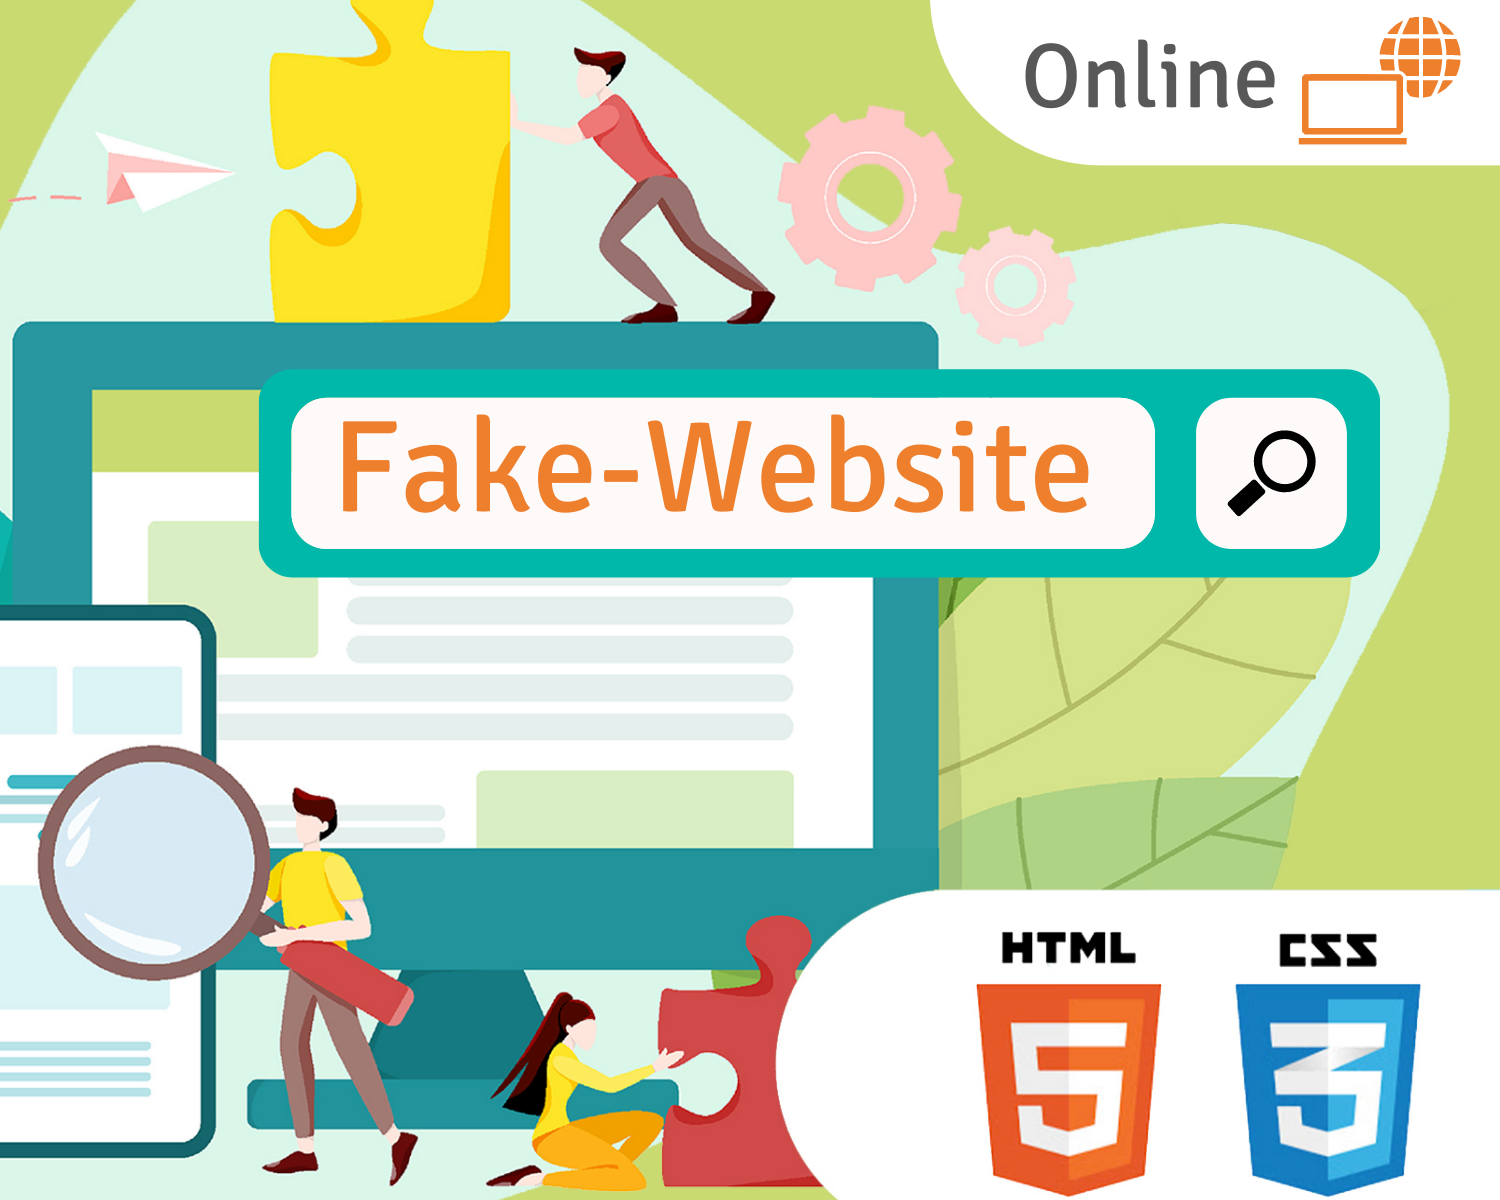 Fake-Website (HTML, Online)